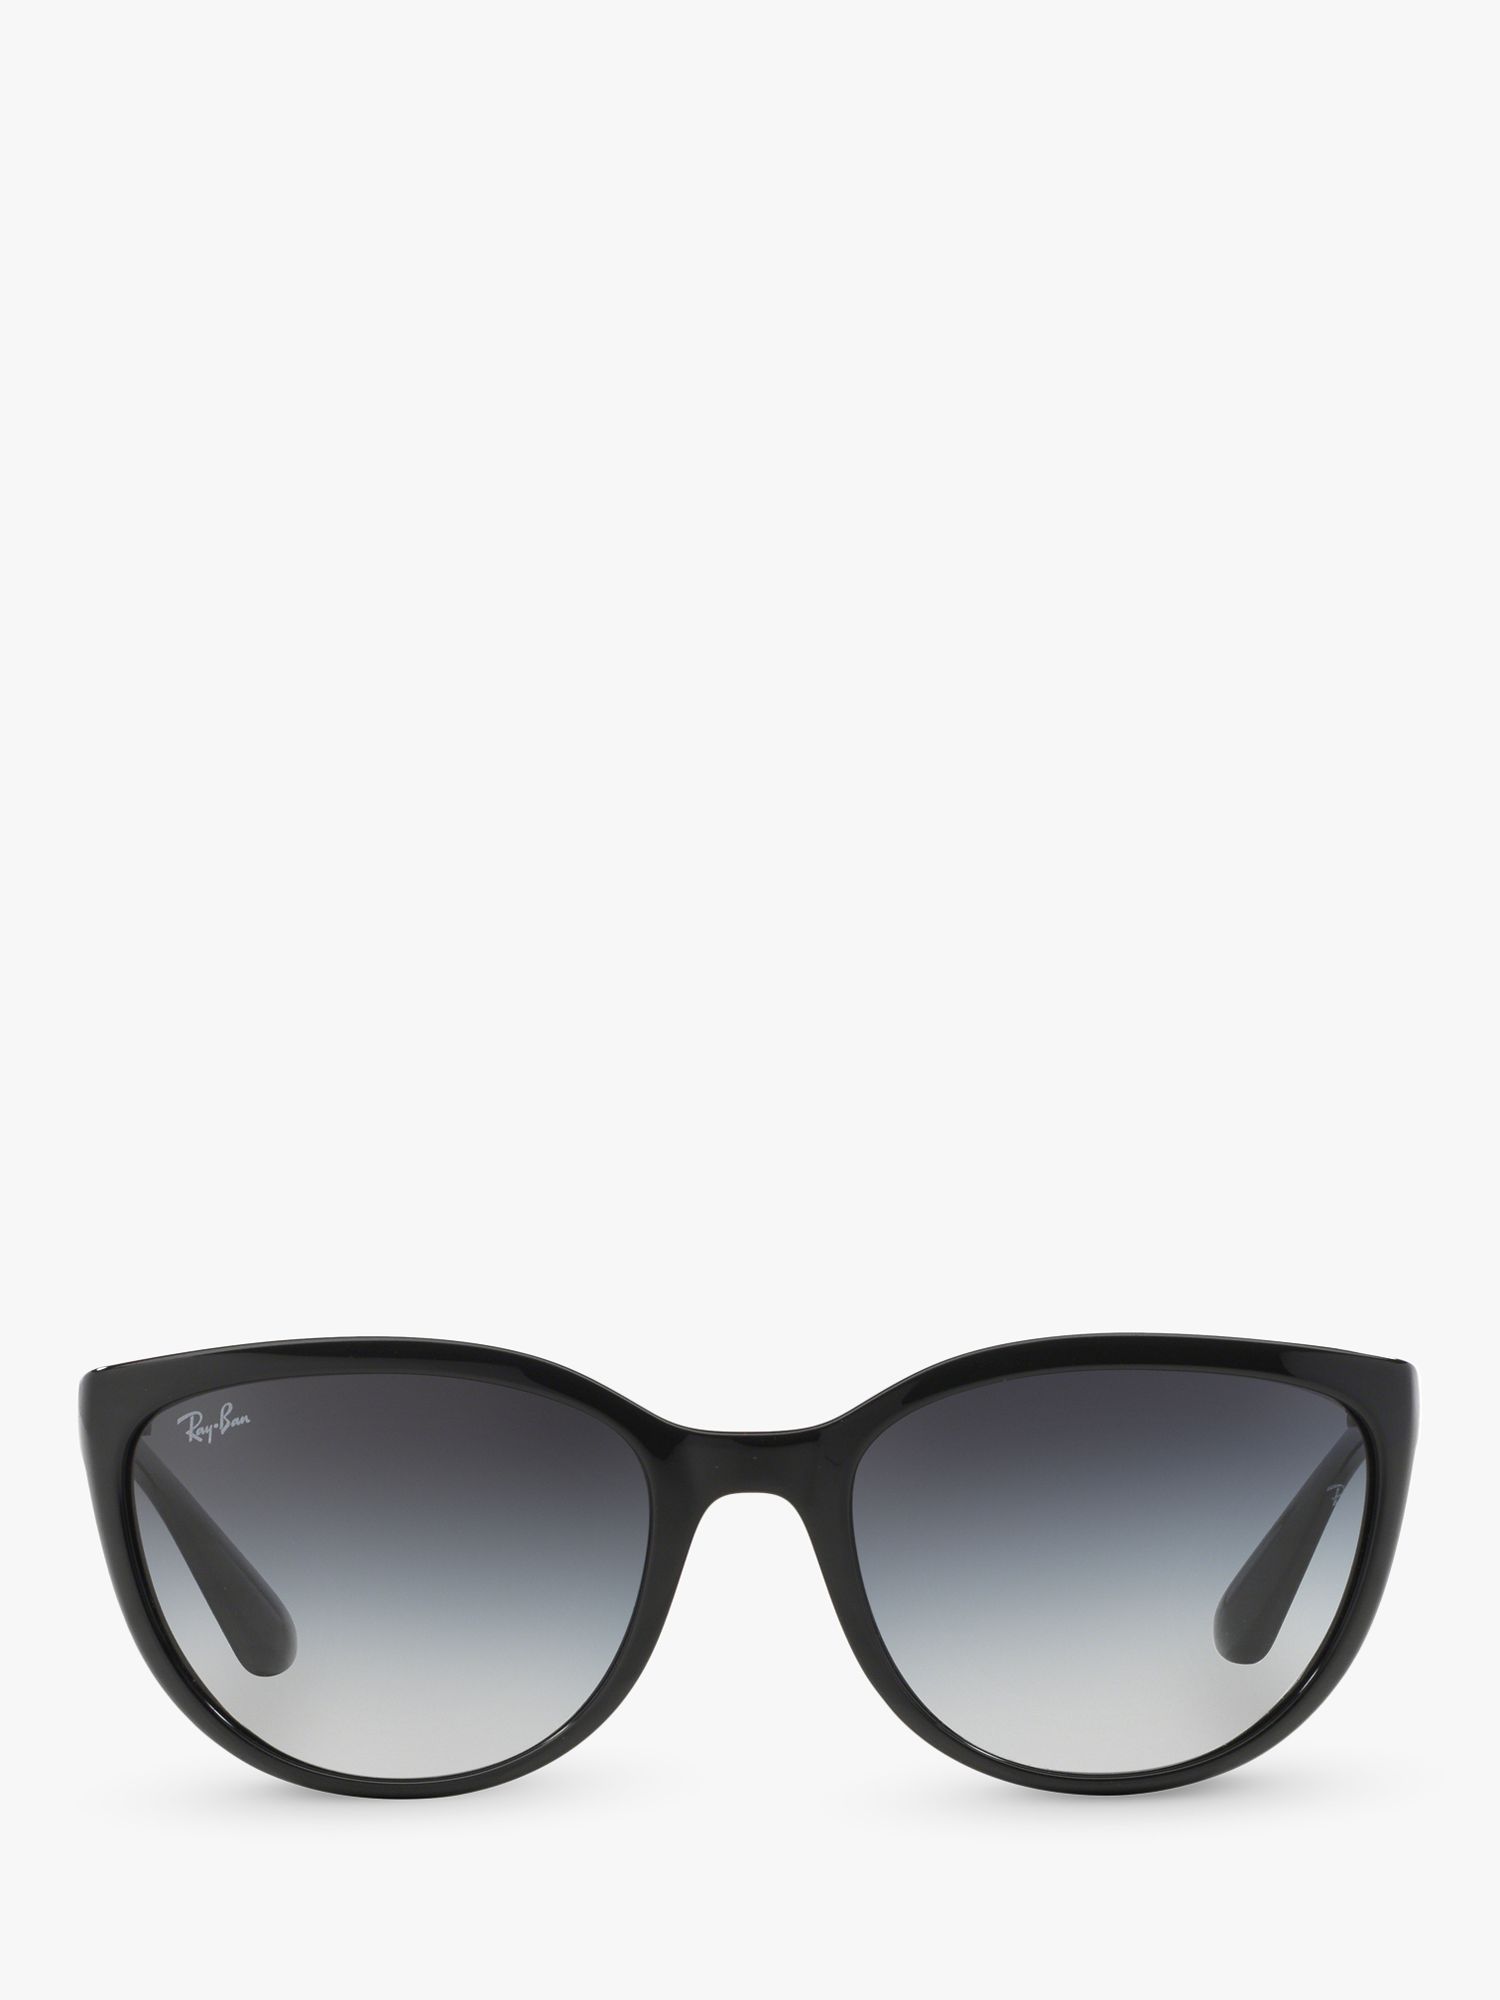 Ray-Ban RB4167 59 Women's Emma Irregular Sunglasses, Black/Grey